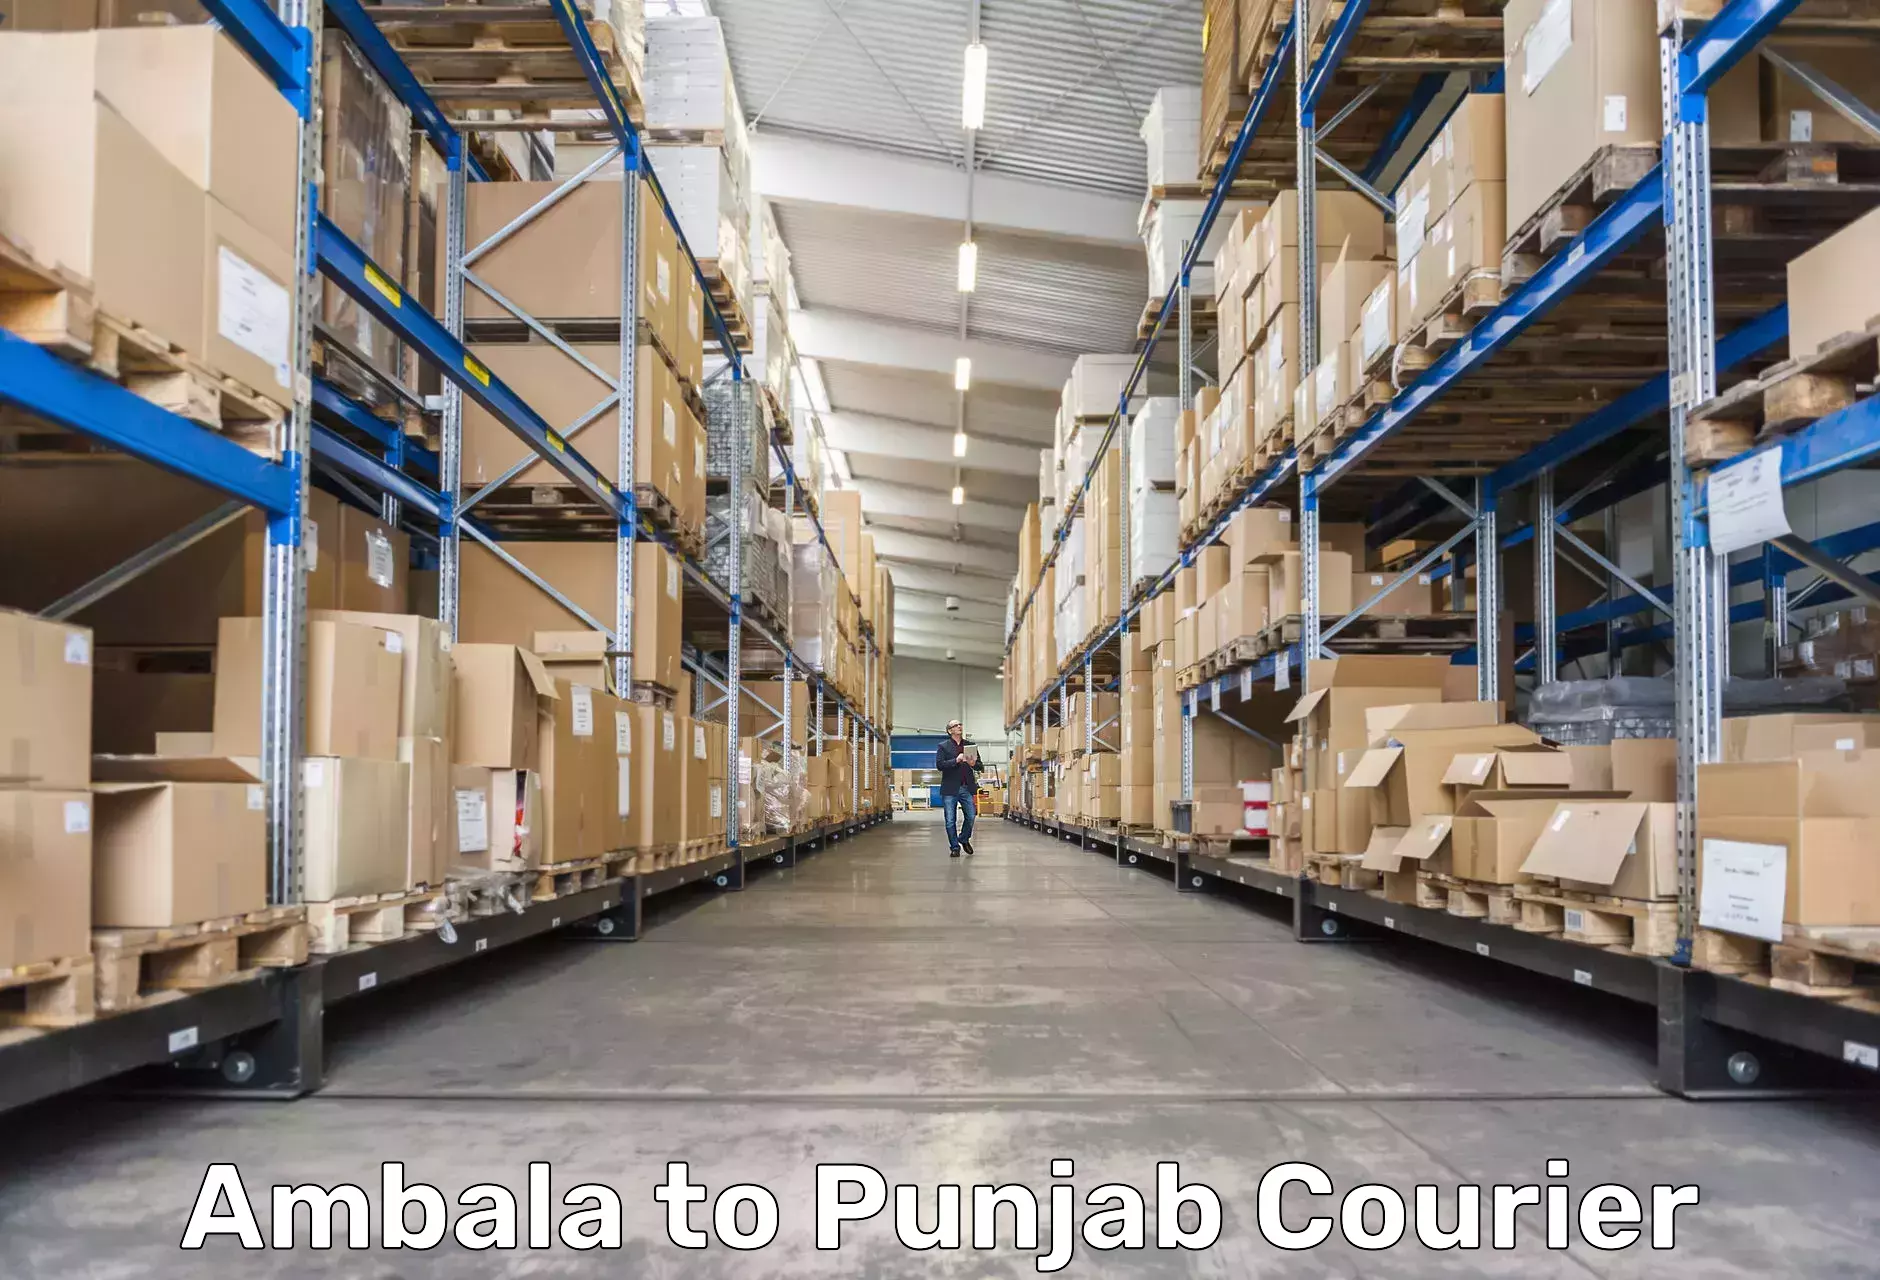 Digital courier platforms Ambala to Bathinda